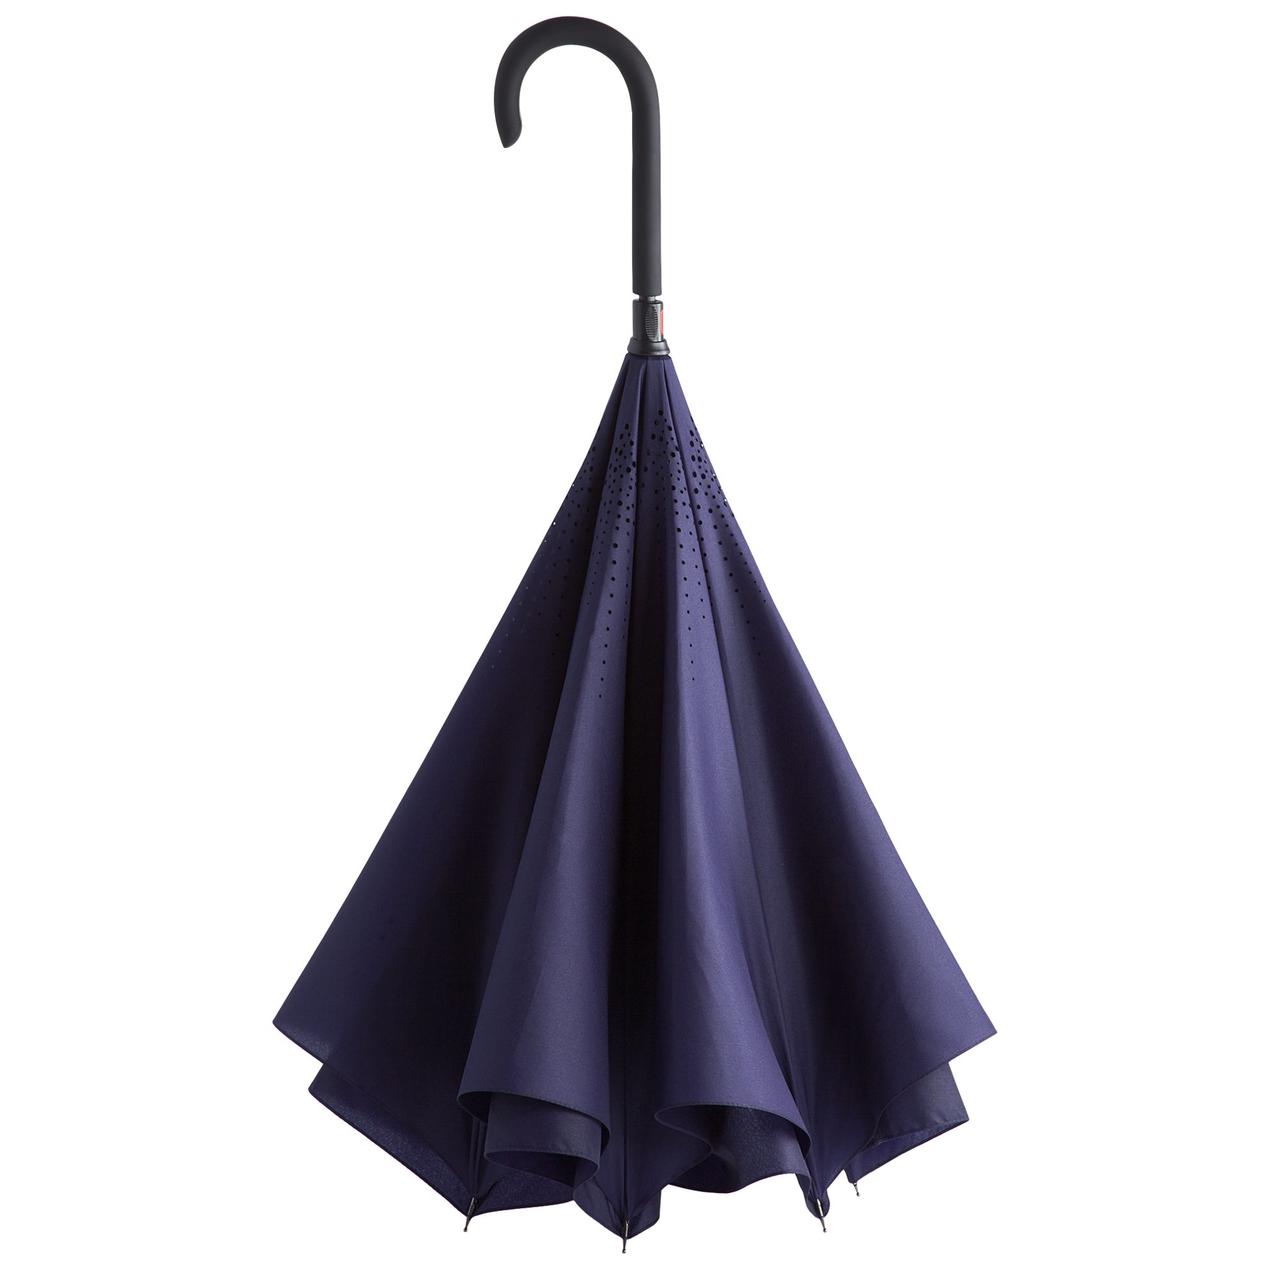 Зонт наоборот Unit Style, трость, темно-фиолетовый (артикул 7772.70), фото 1